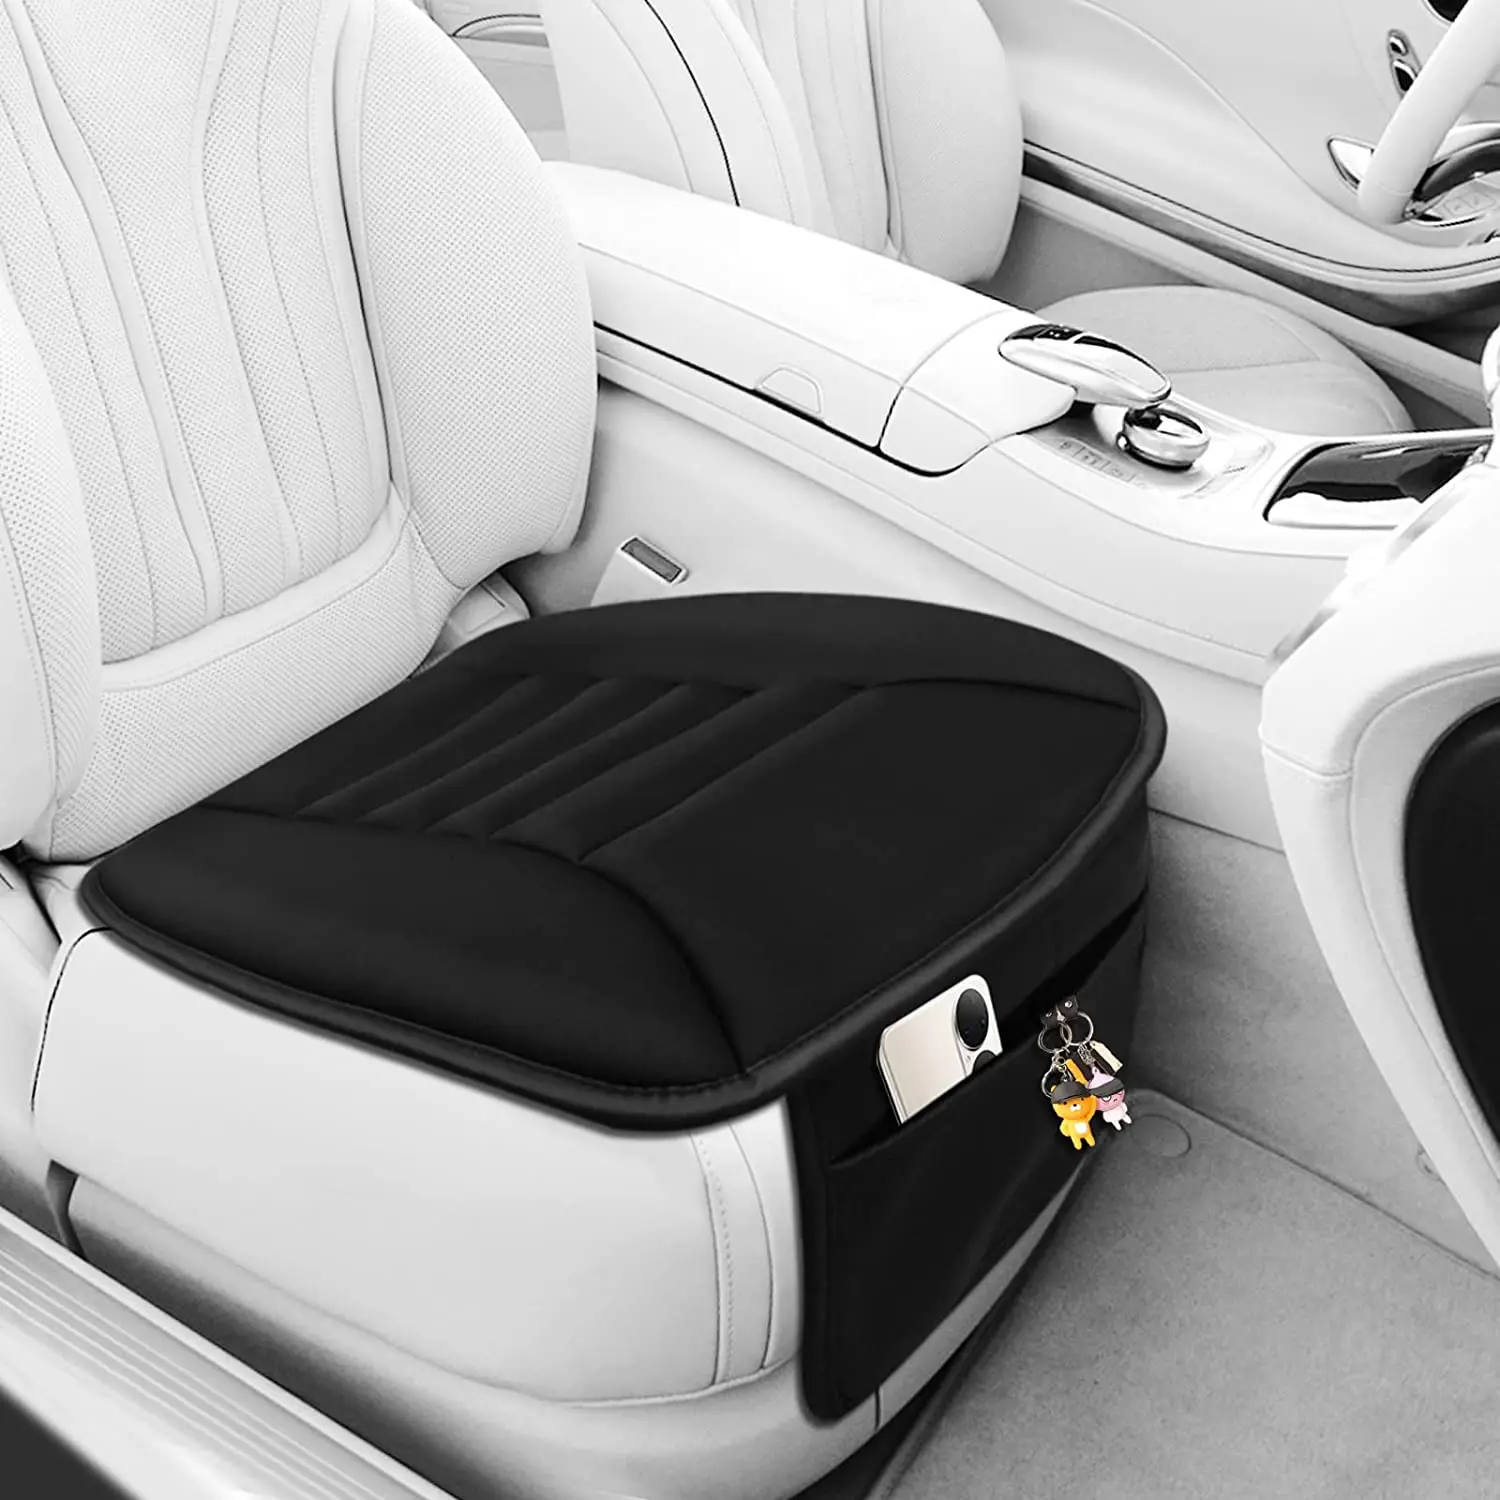 https://ae01.alicdn.com/kf/S8bfead24228a4429aef43bd40d06658a3/Car-Seat-Cushion-With-Pocket-Memory-Cotton-Universal-Seat-Pads-Driver-Soft-Cushions-Chair-Pads-Anti.jpg